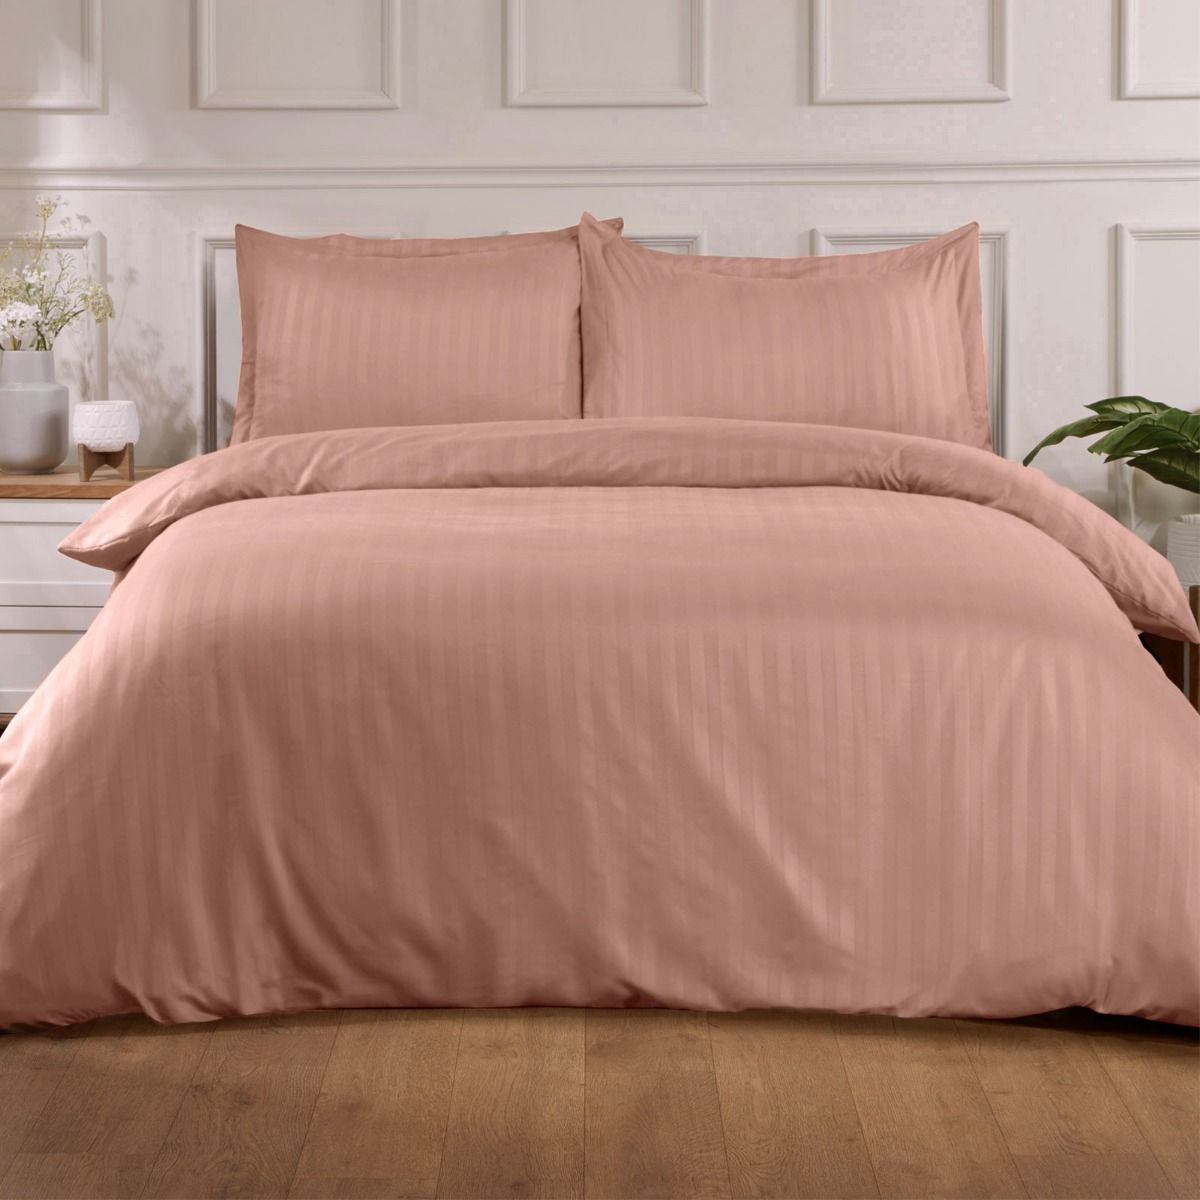 Brentfords Satin Stripe Duvet Single Cover with Pillow Case Set - Pink